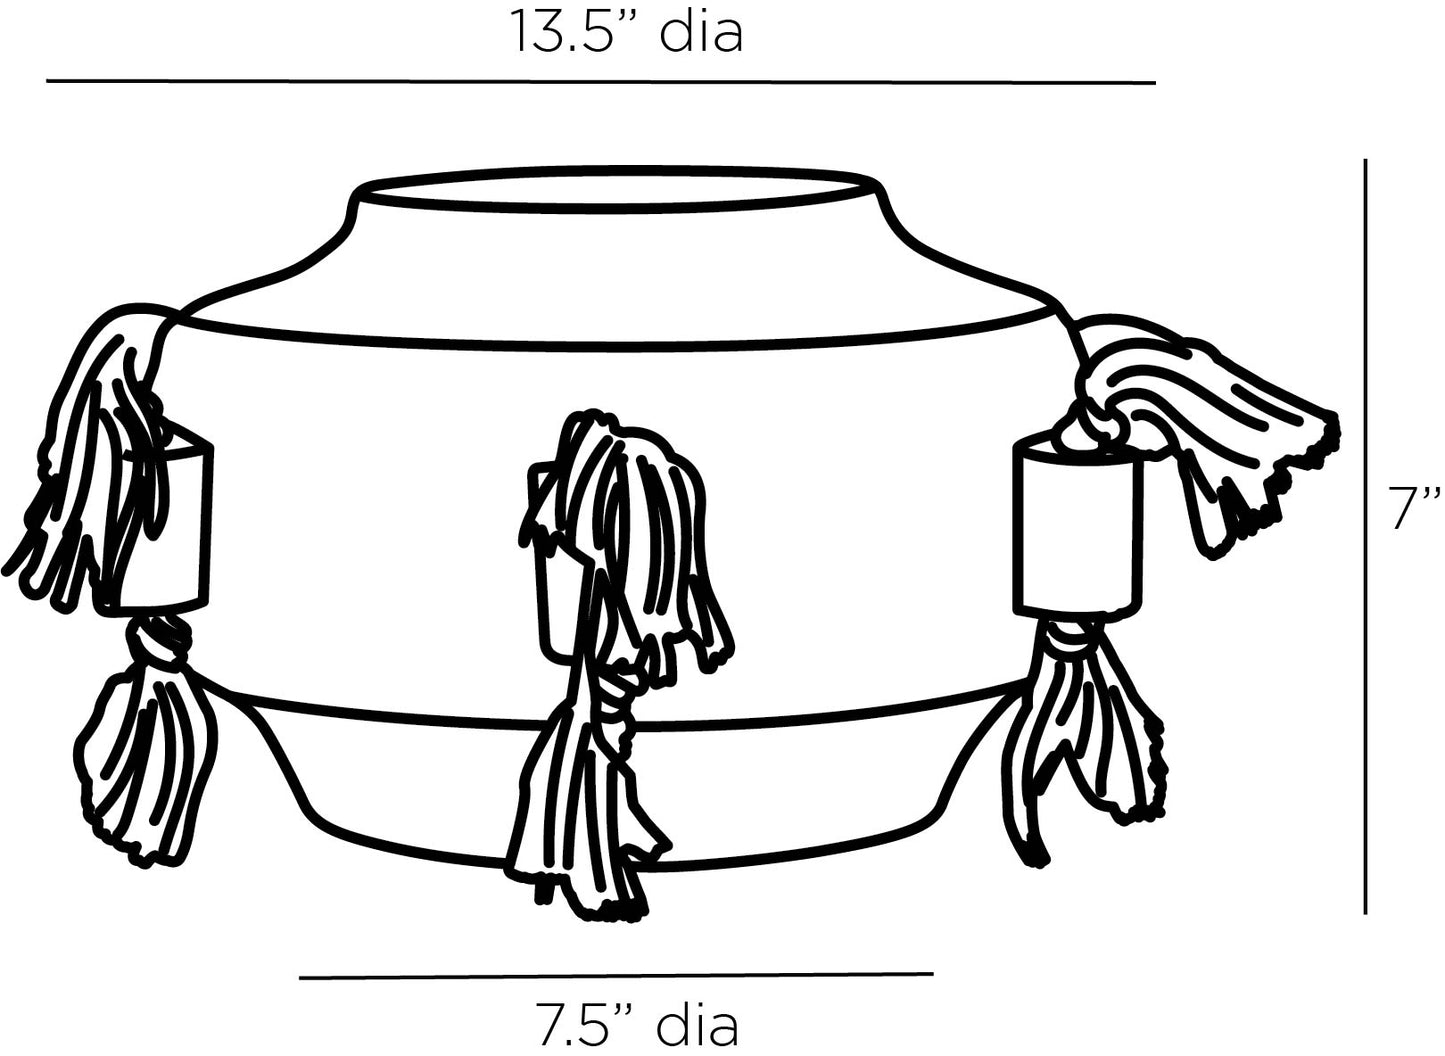 Whitewashed Verena Vase - Classical Roman Design with Lug Handles